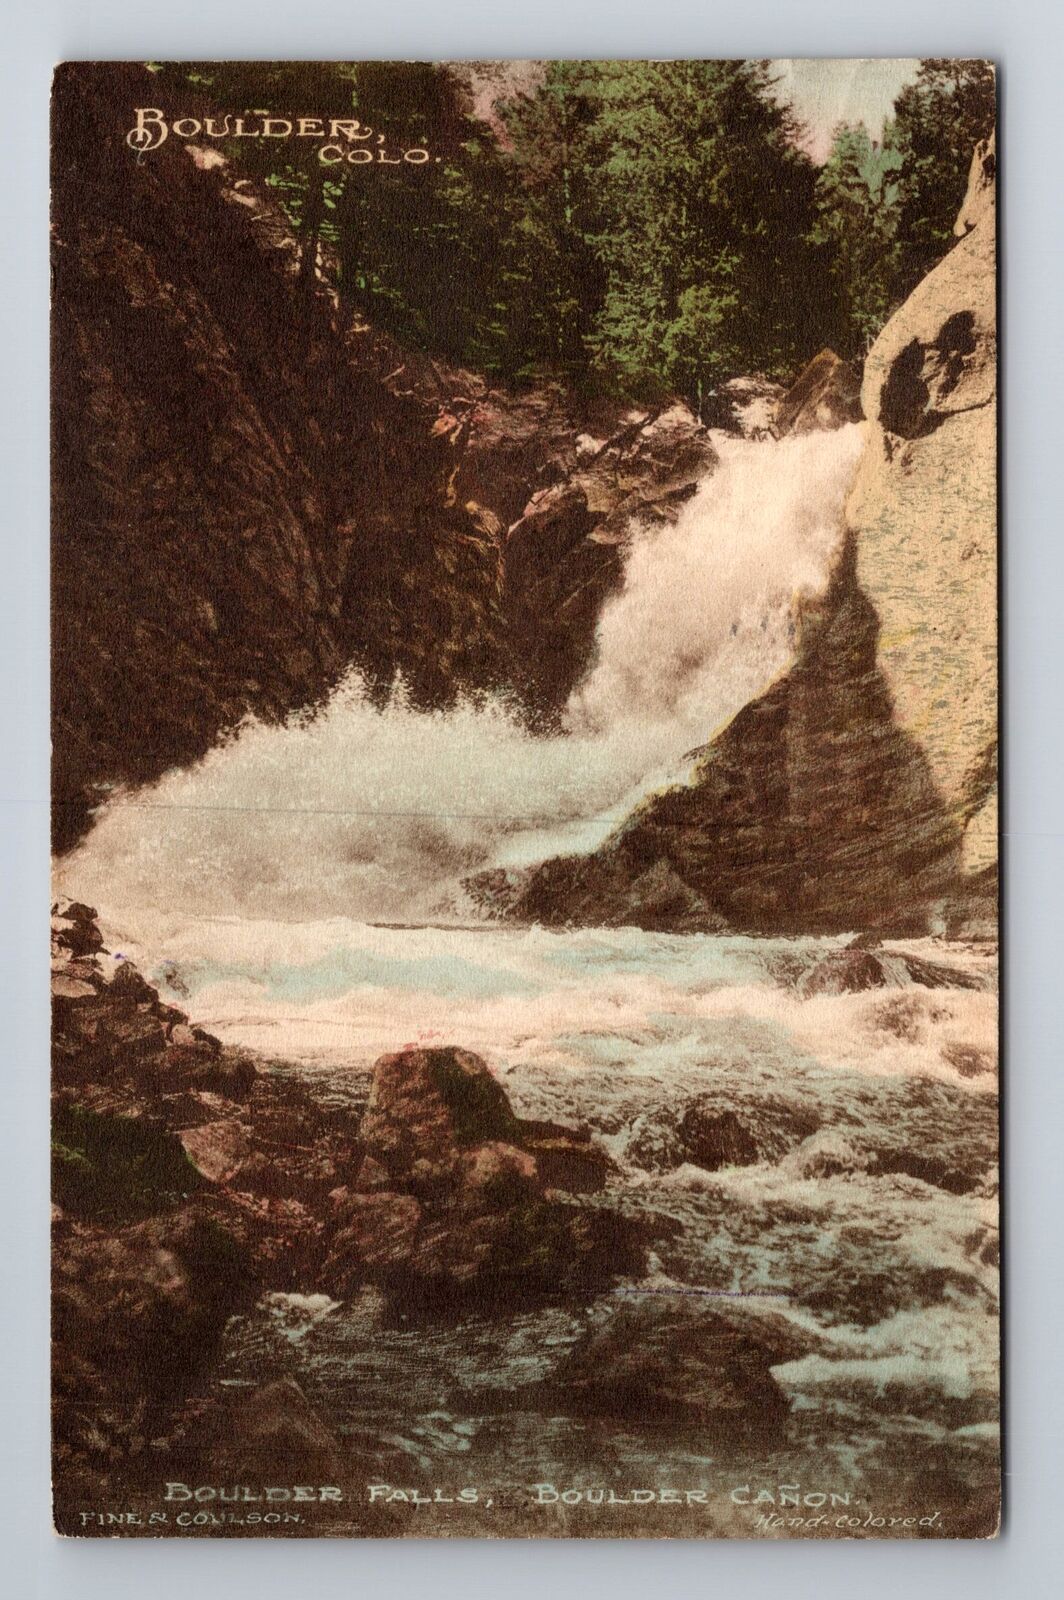 Boulder CO-Colorado, Boulder Canon & Falls, Antique Vintage c1916 Postcard